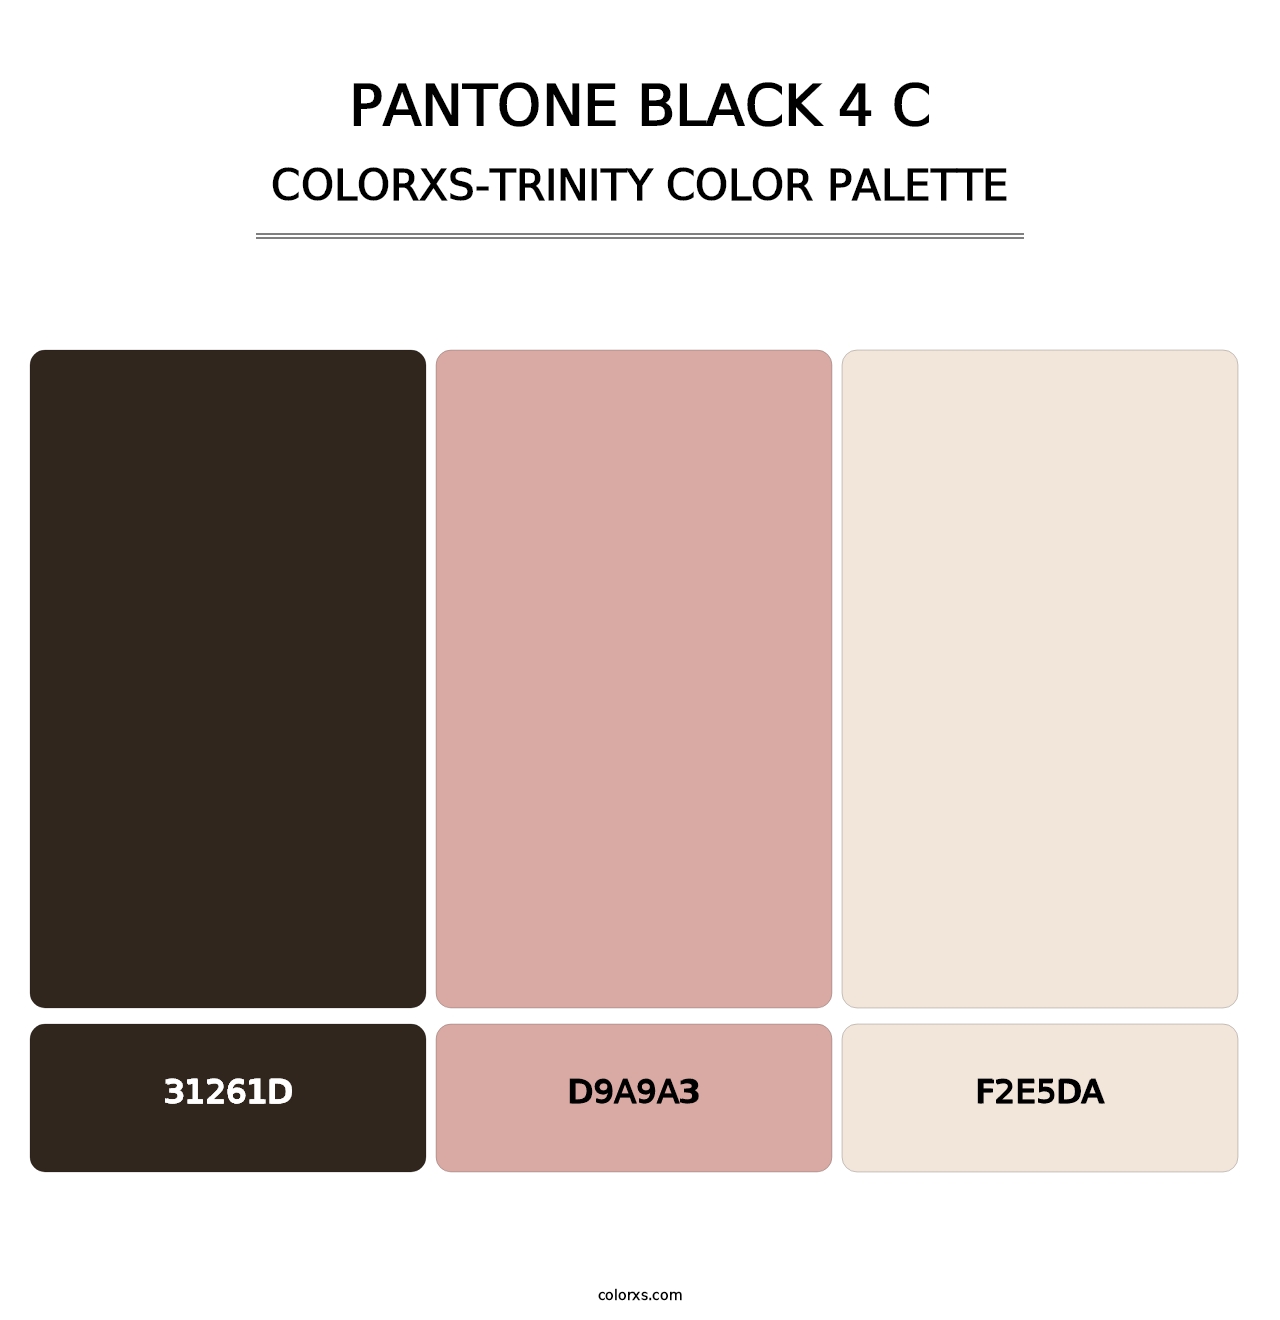 PANTONE Black 4 C - Colorxs Trinity Palette